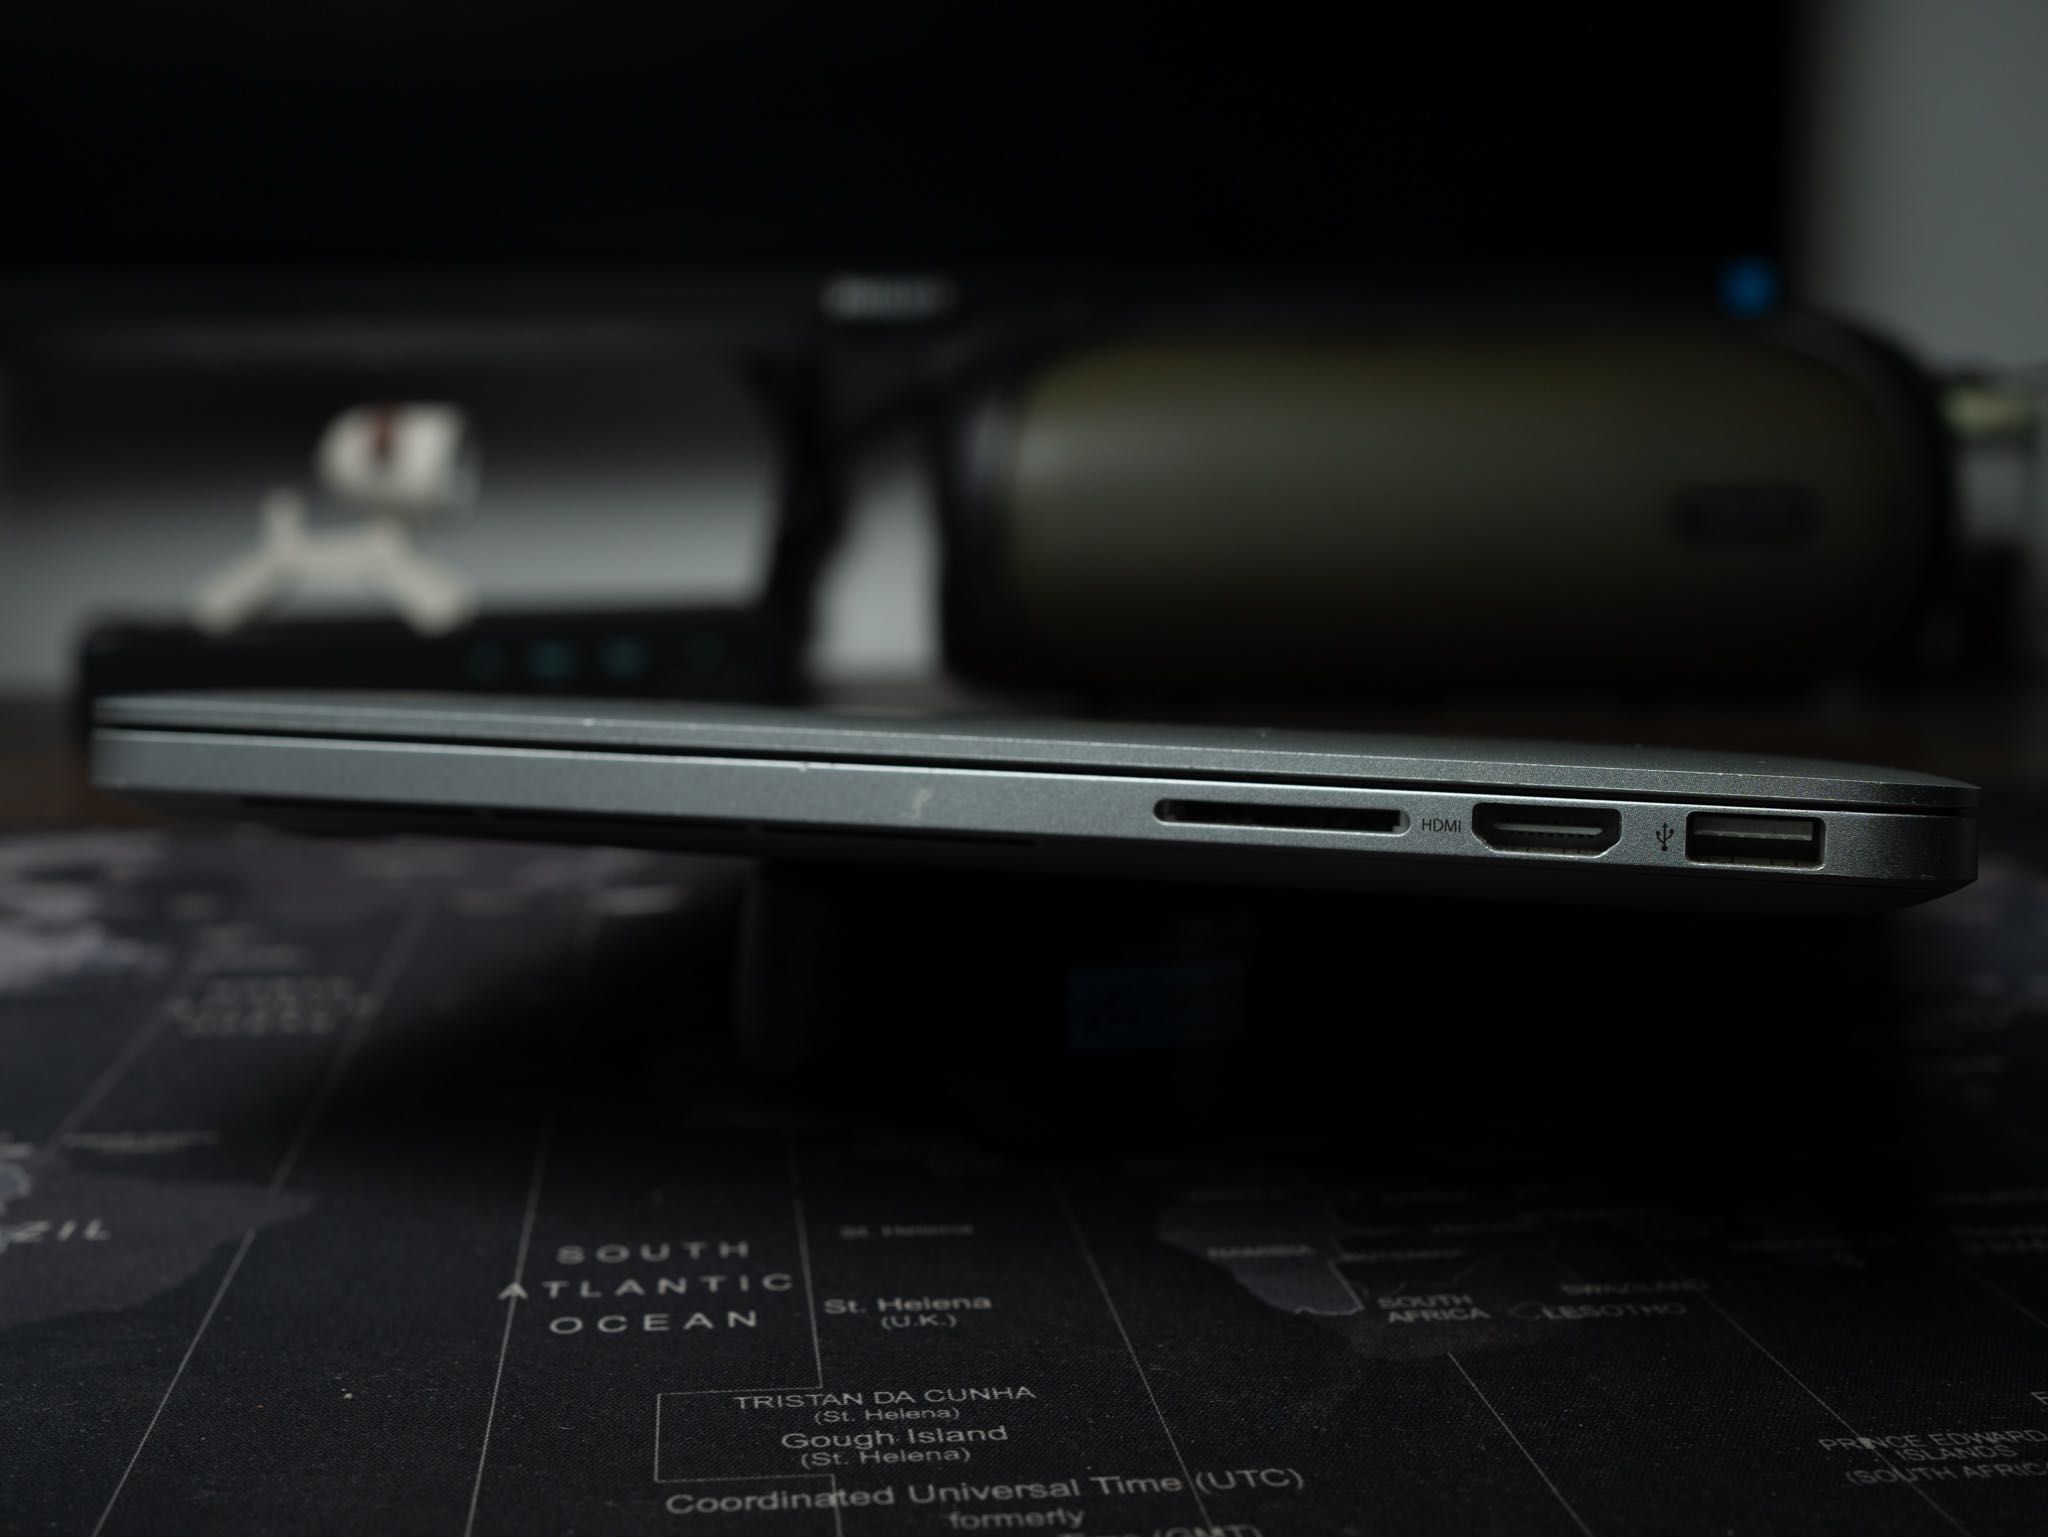 Apple MacBook Pro 13 early 2015 16GB RAM 256GB SSD retina